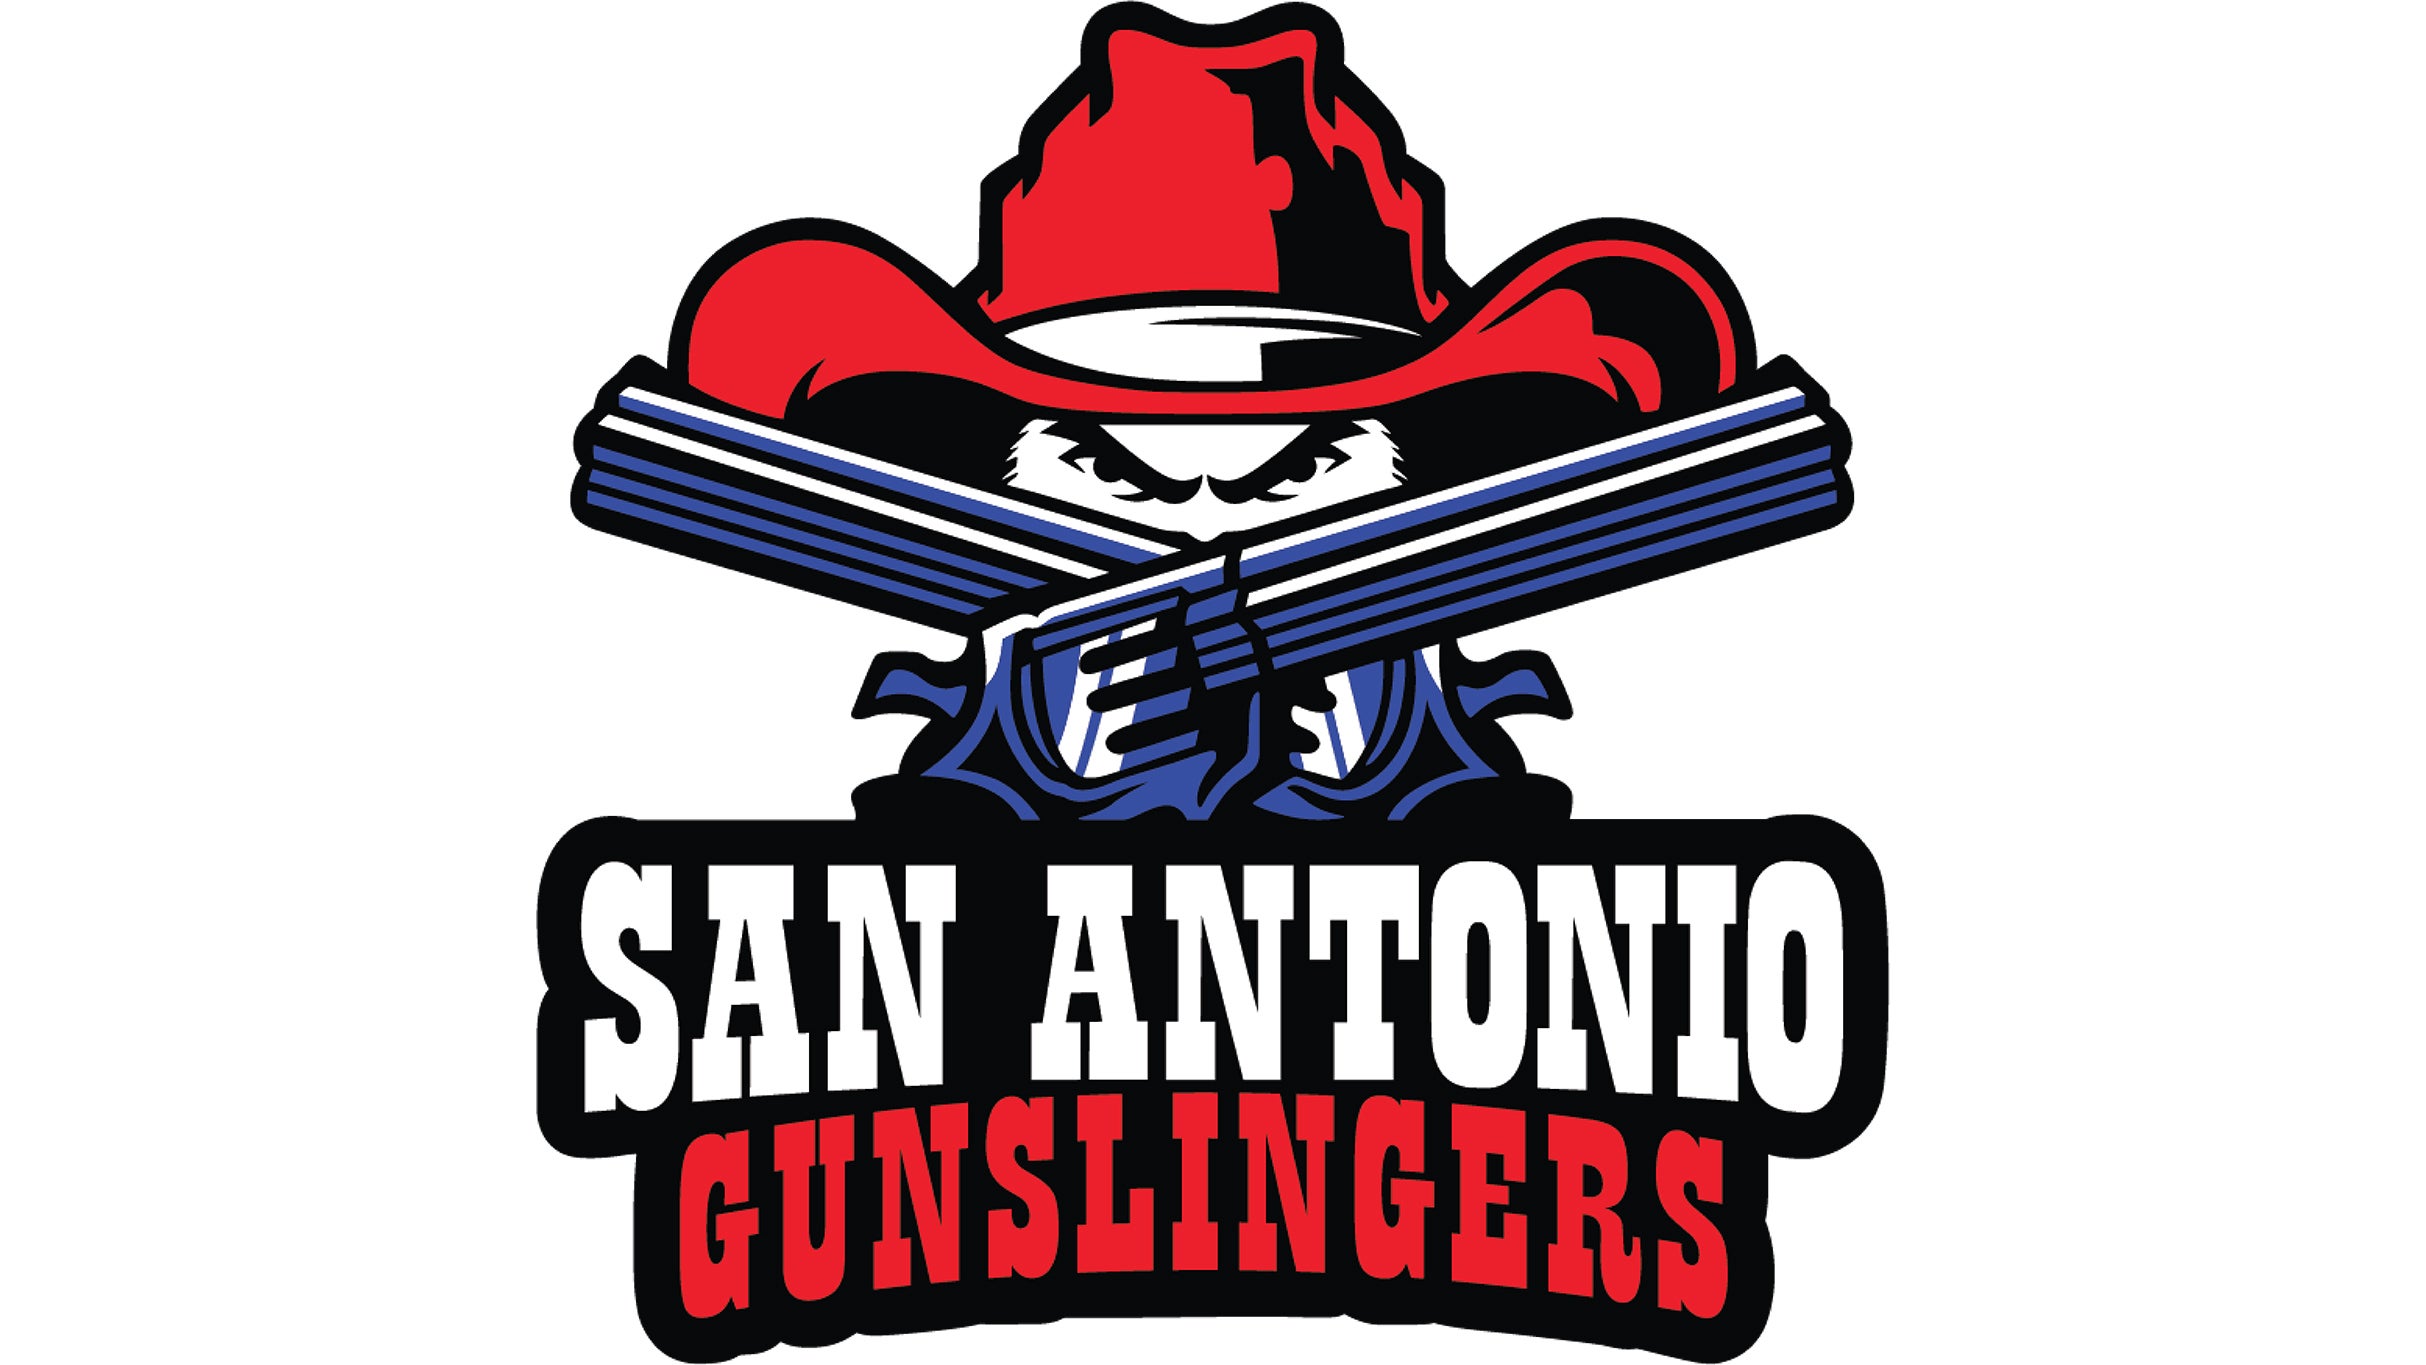 San Antonio Gunslingers vs. Frisco Fighters